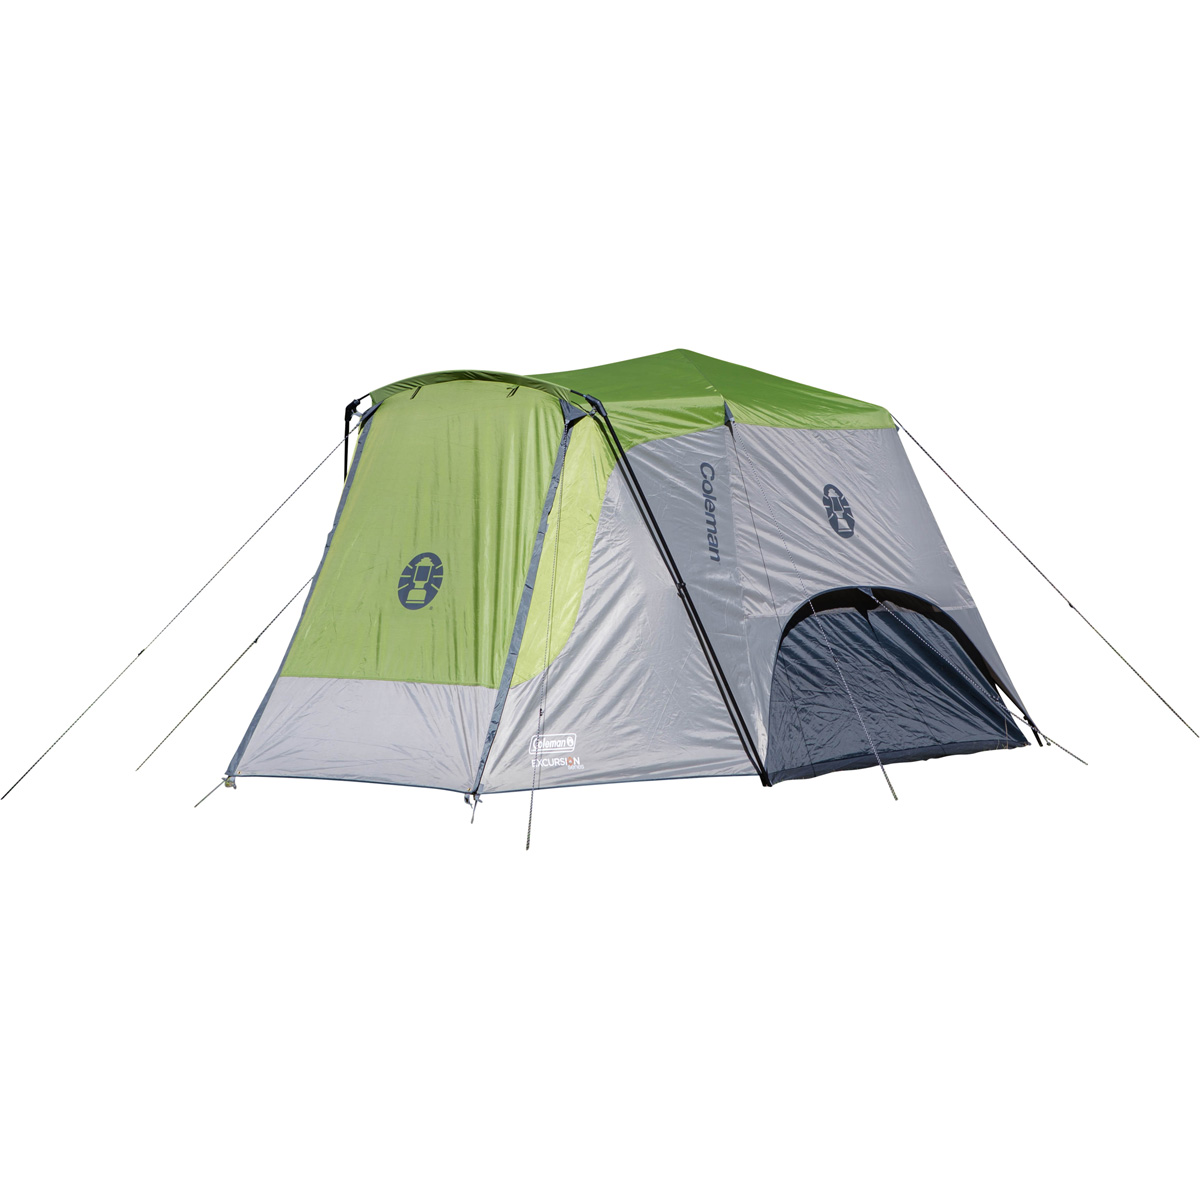 Coleman Excursion Instant Up Tent 6 Person